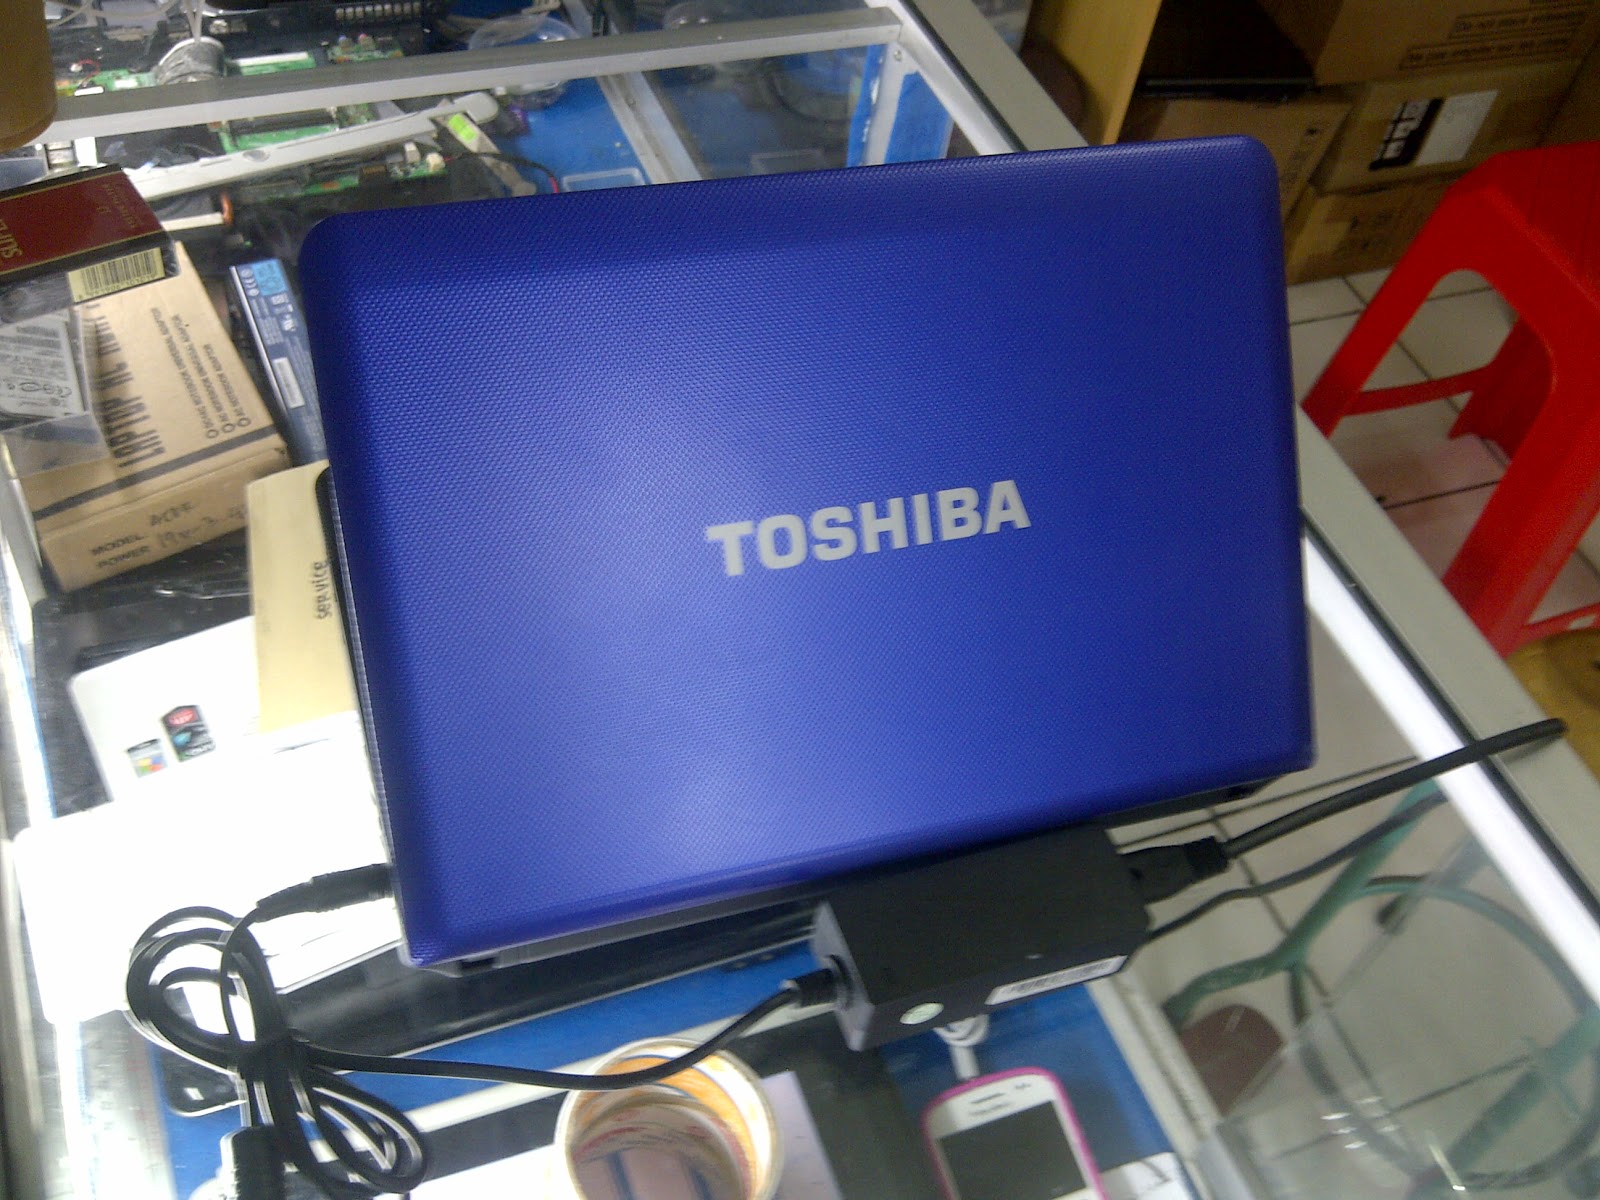 Graphics media accelerator 3600. Нетбук Toshiba nb510. Нетбук Тошиба синий. ТВ приставка nb510-WD. DBE 2800n.